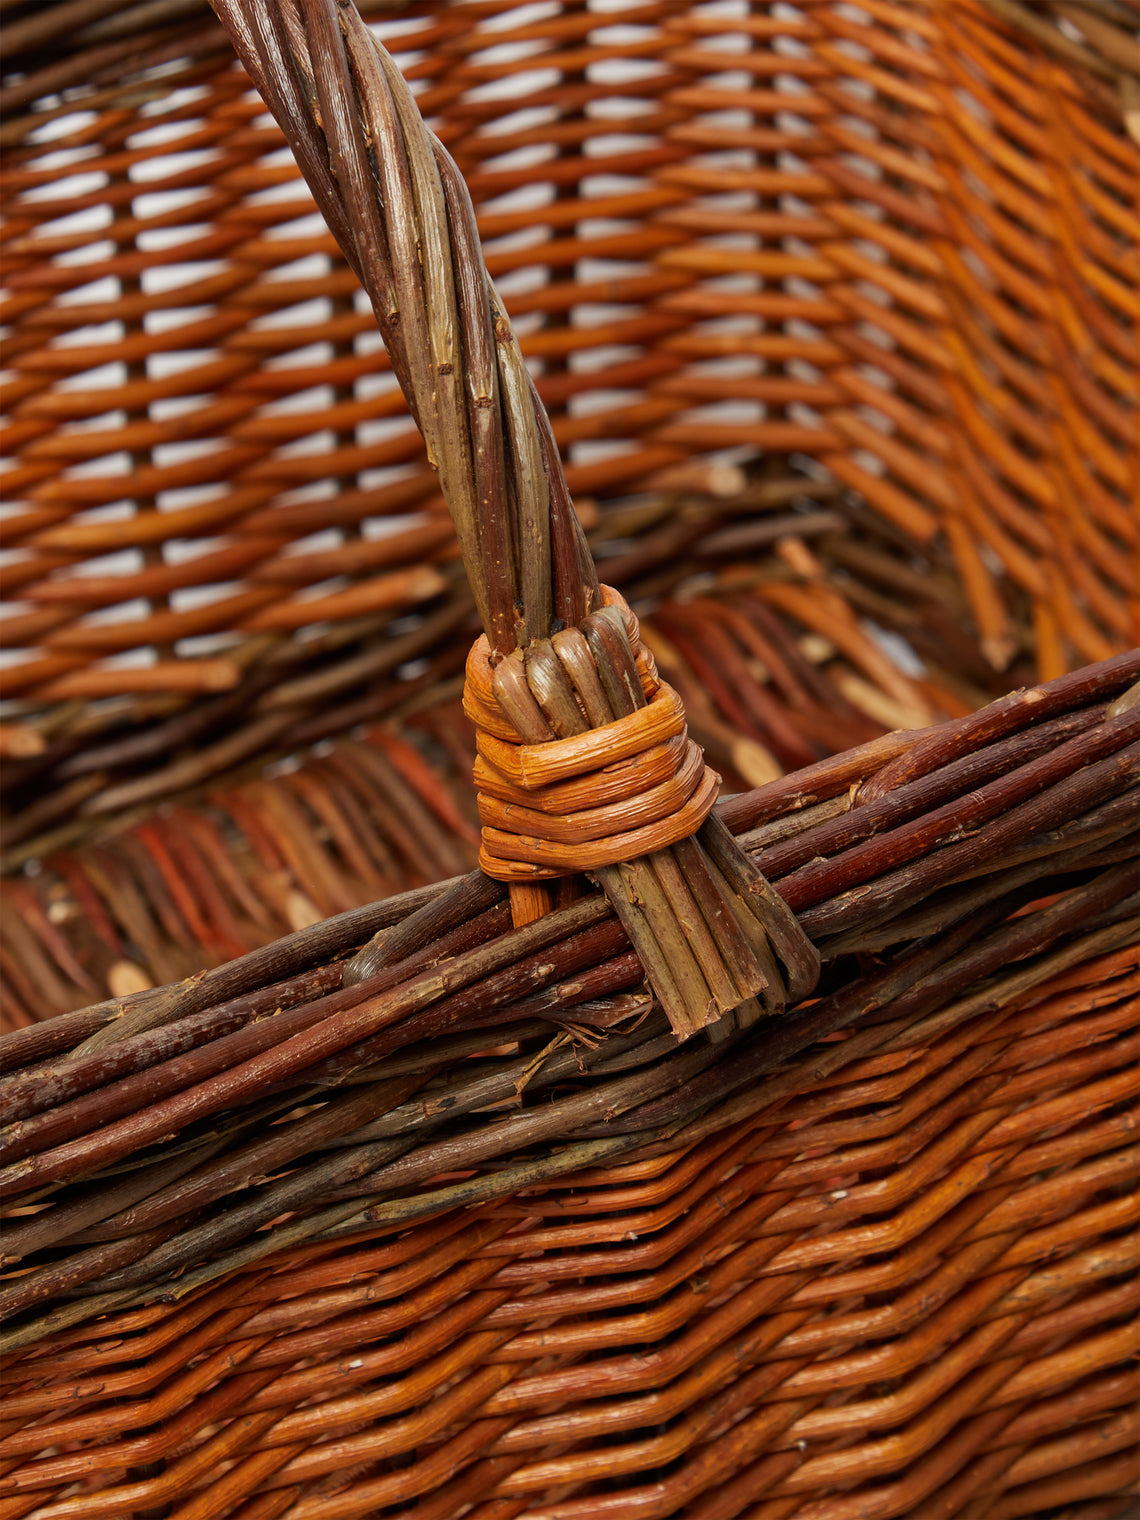 Valérie Lavaure - Handwoven Willow Rectangular Basket -  - ABASK